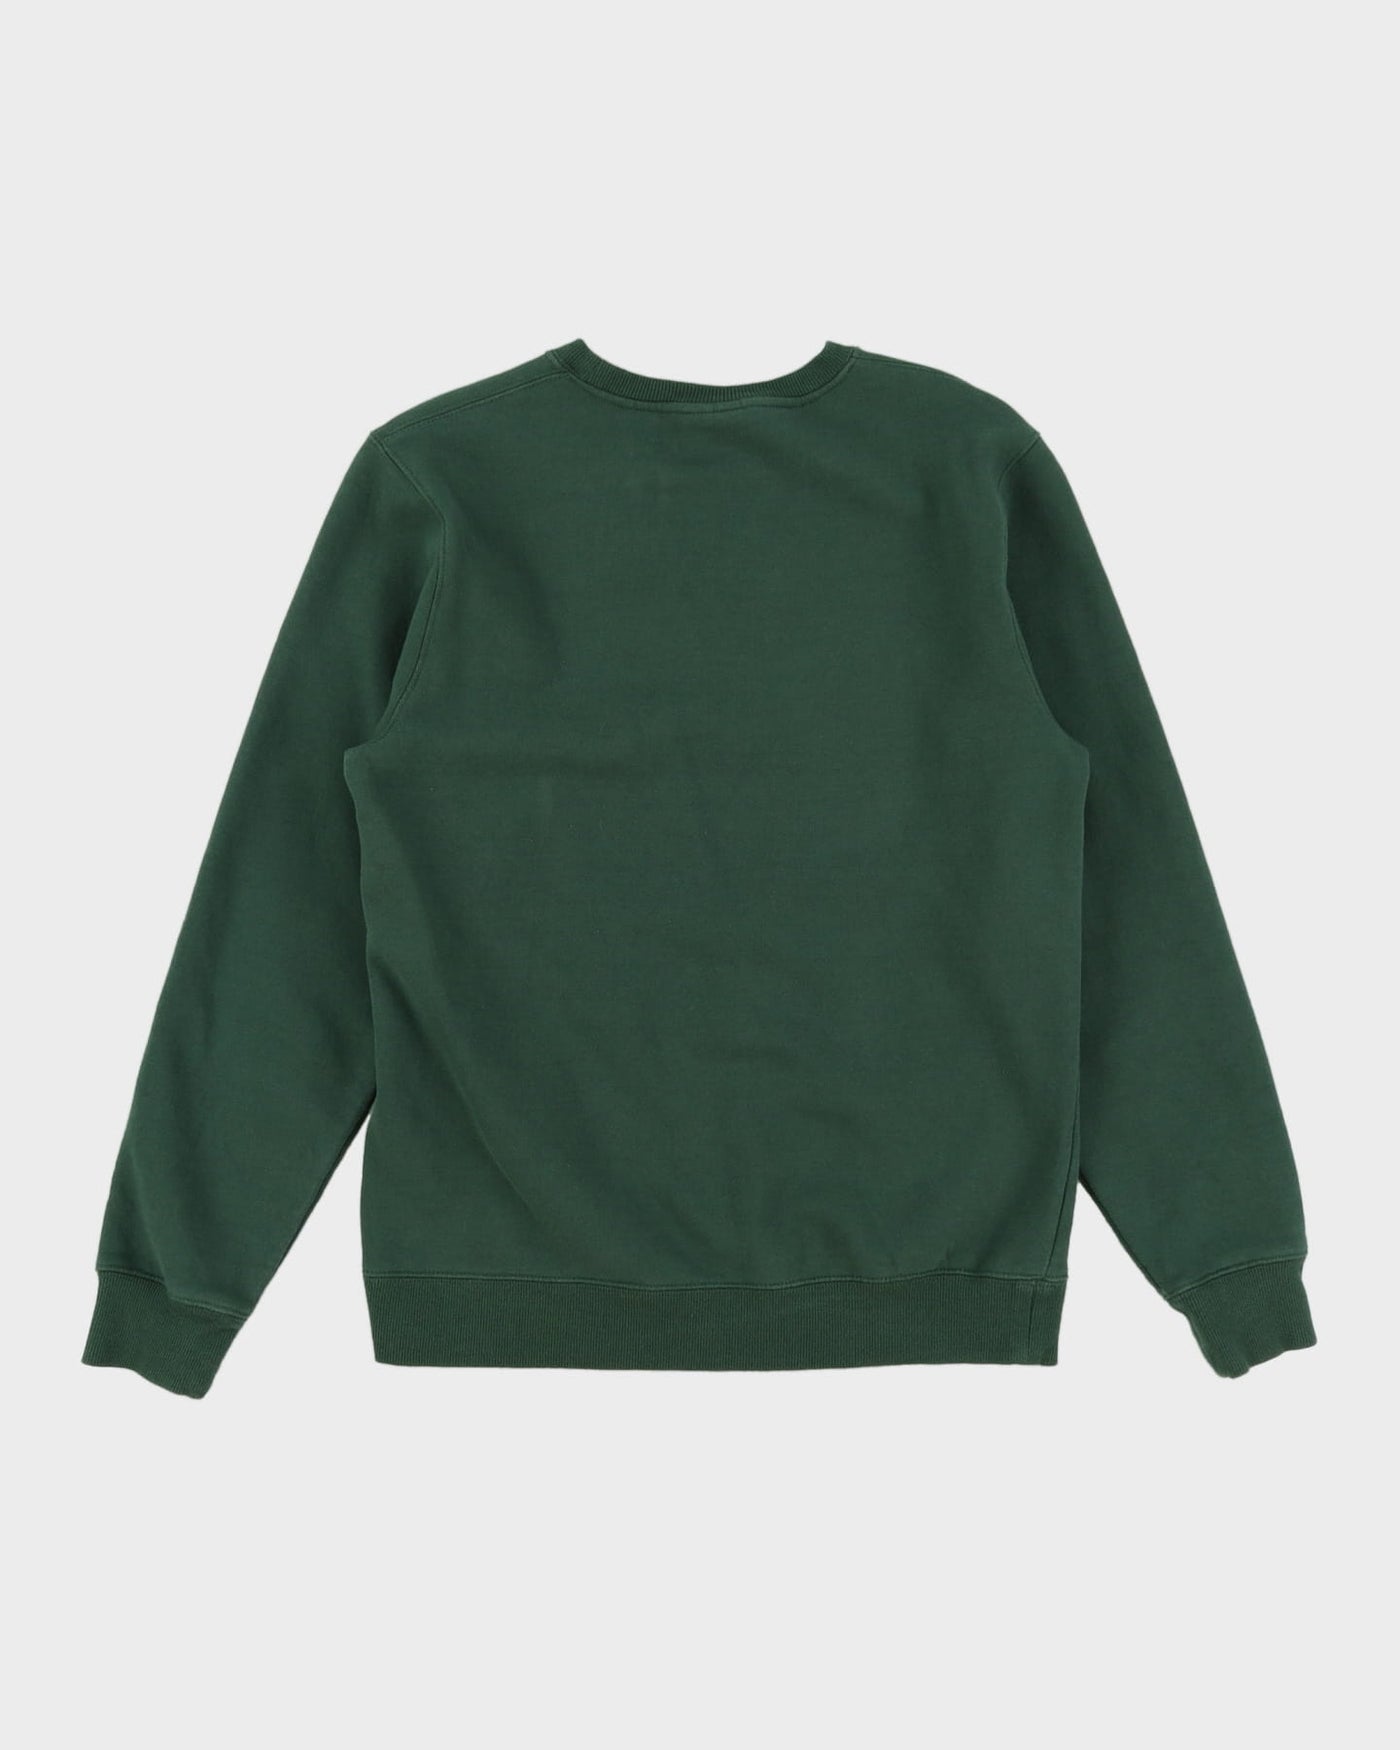 Stussy Embroidered Logo Green Sweatshirt - M